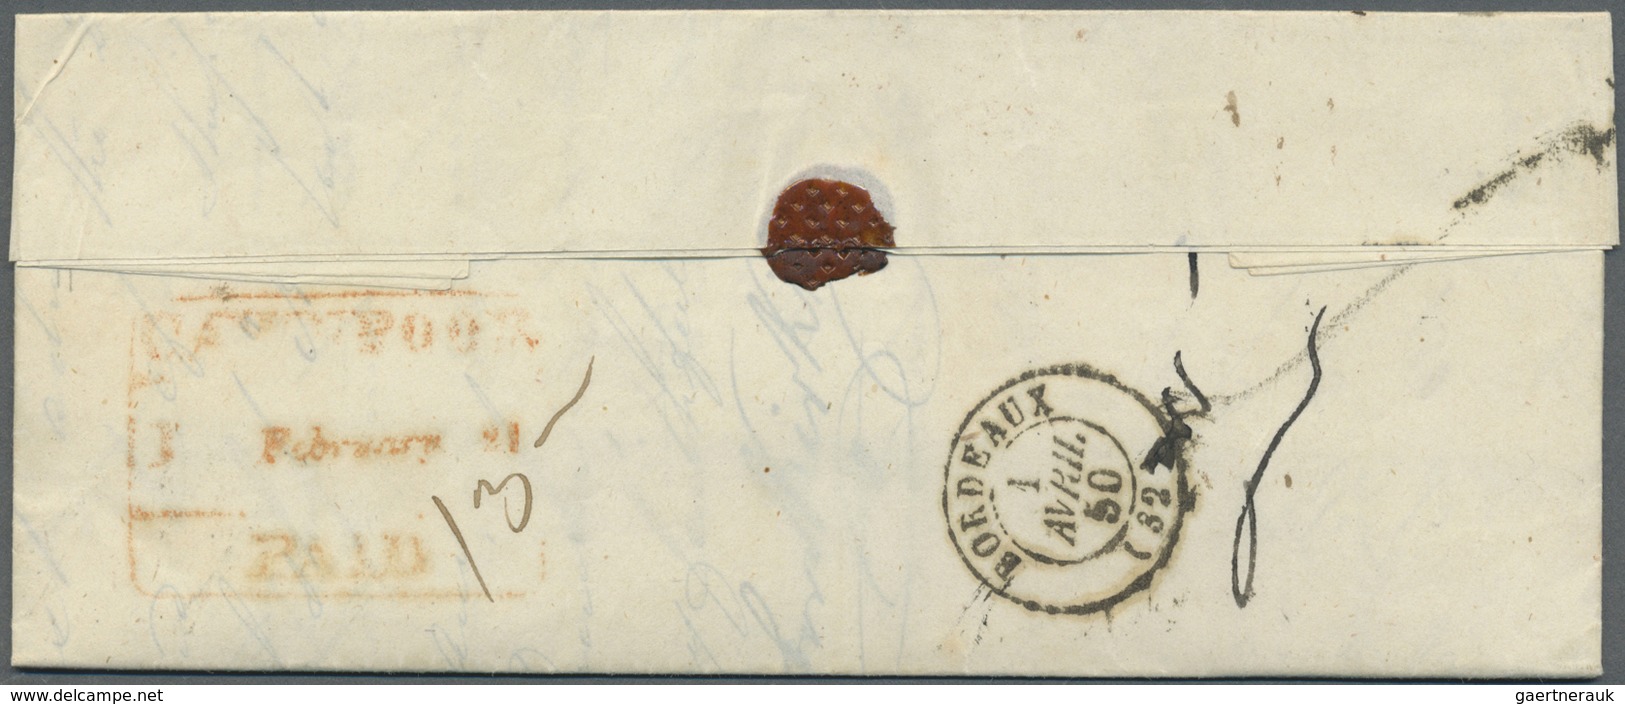 Br Indien - Vorphilatelie: 1827-1850: Four letters to Bordeaux, FRANCE, with 1) 1827 letter from Calcut